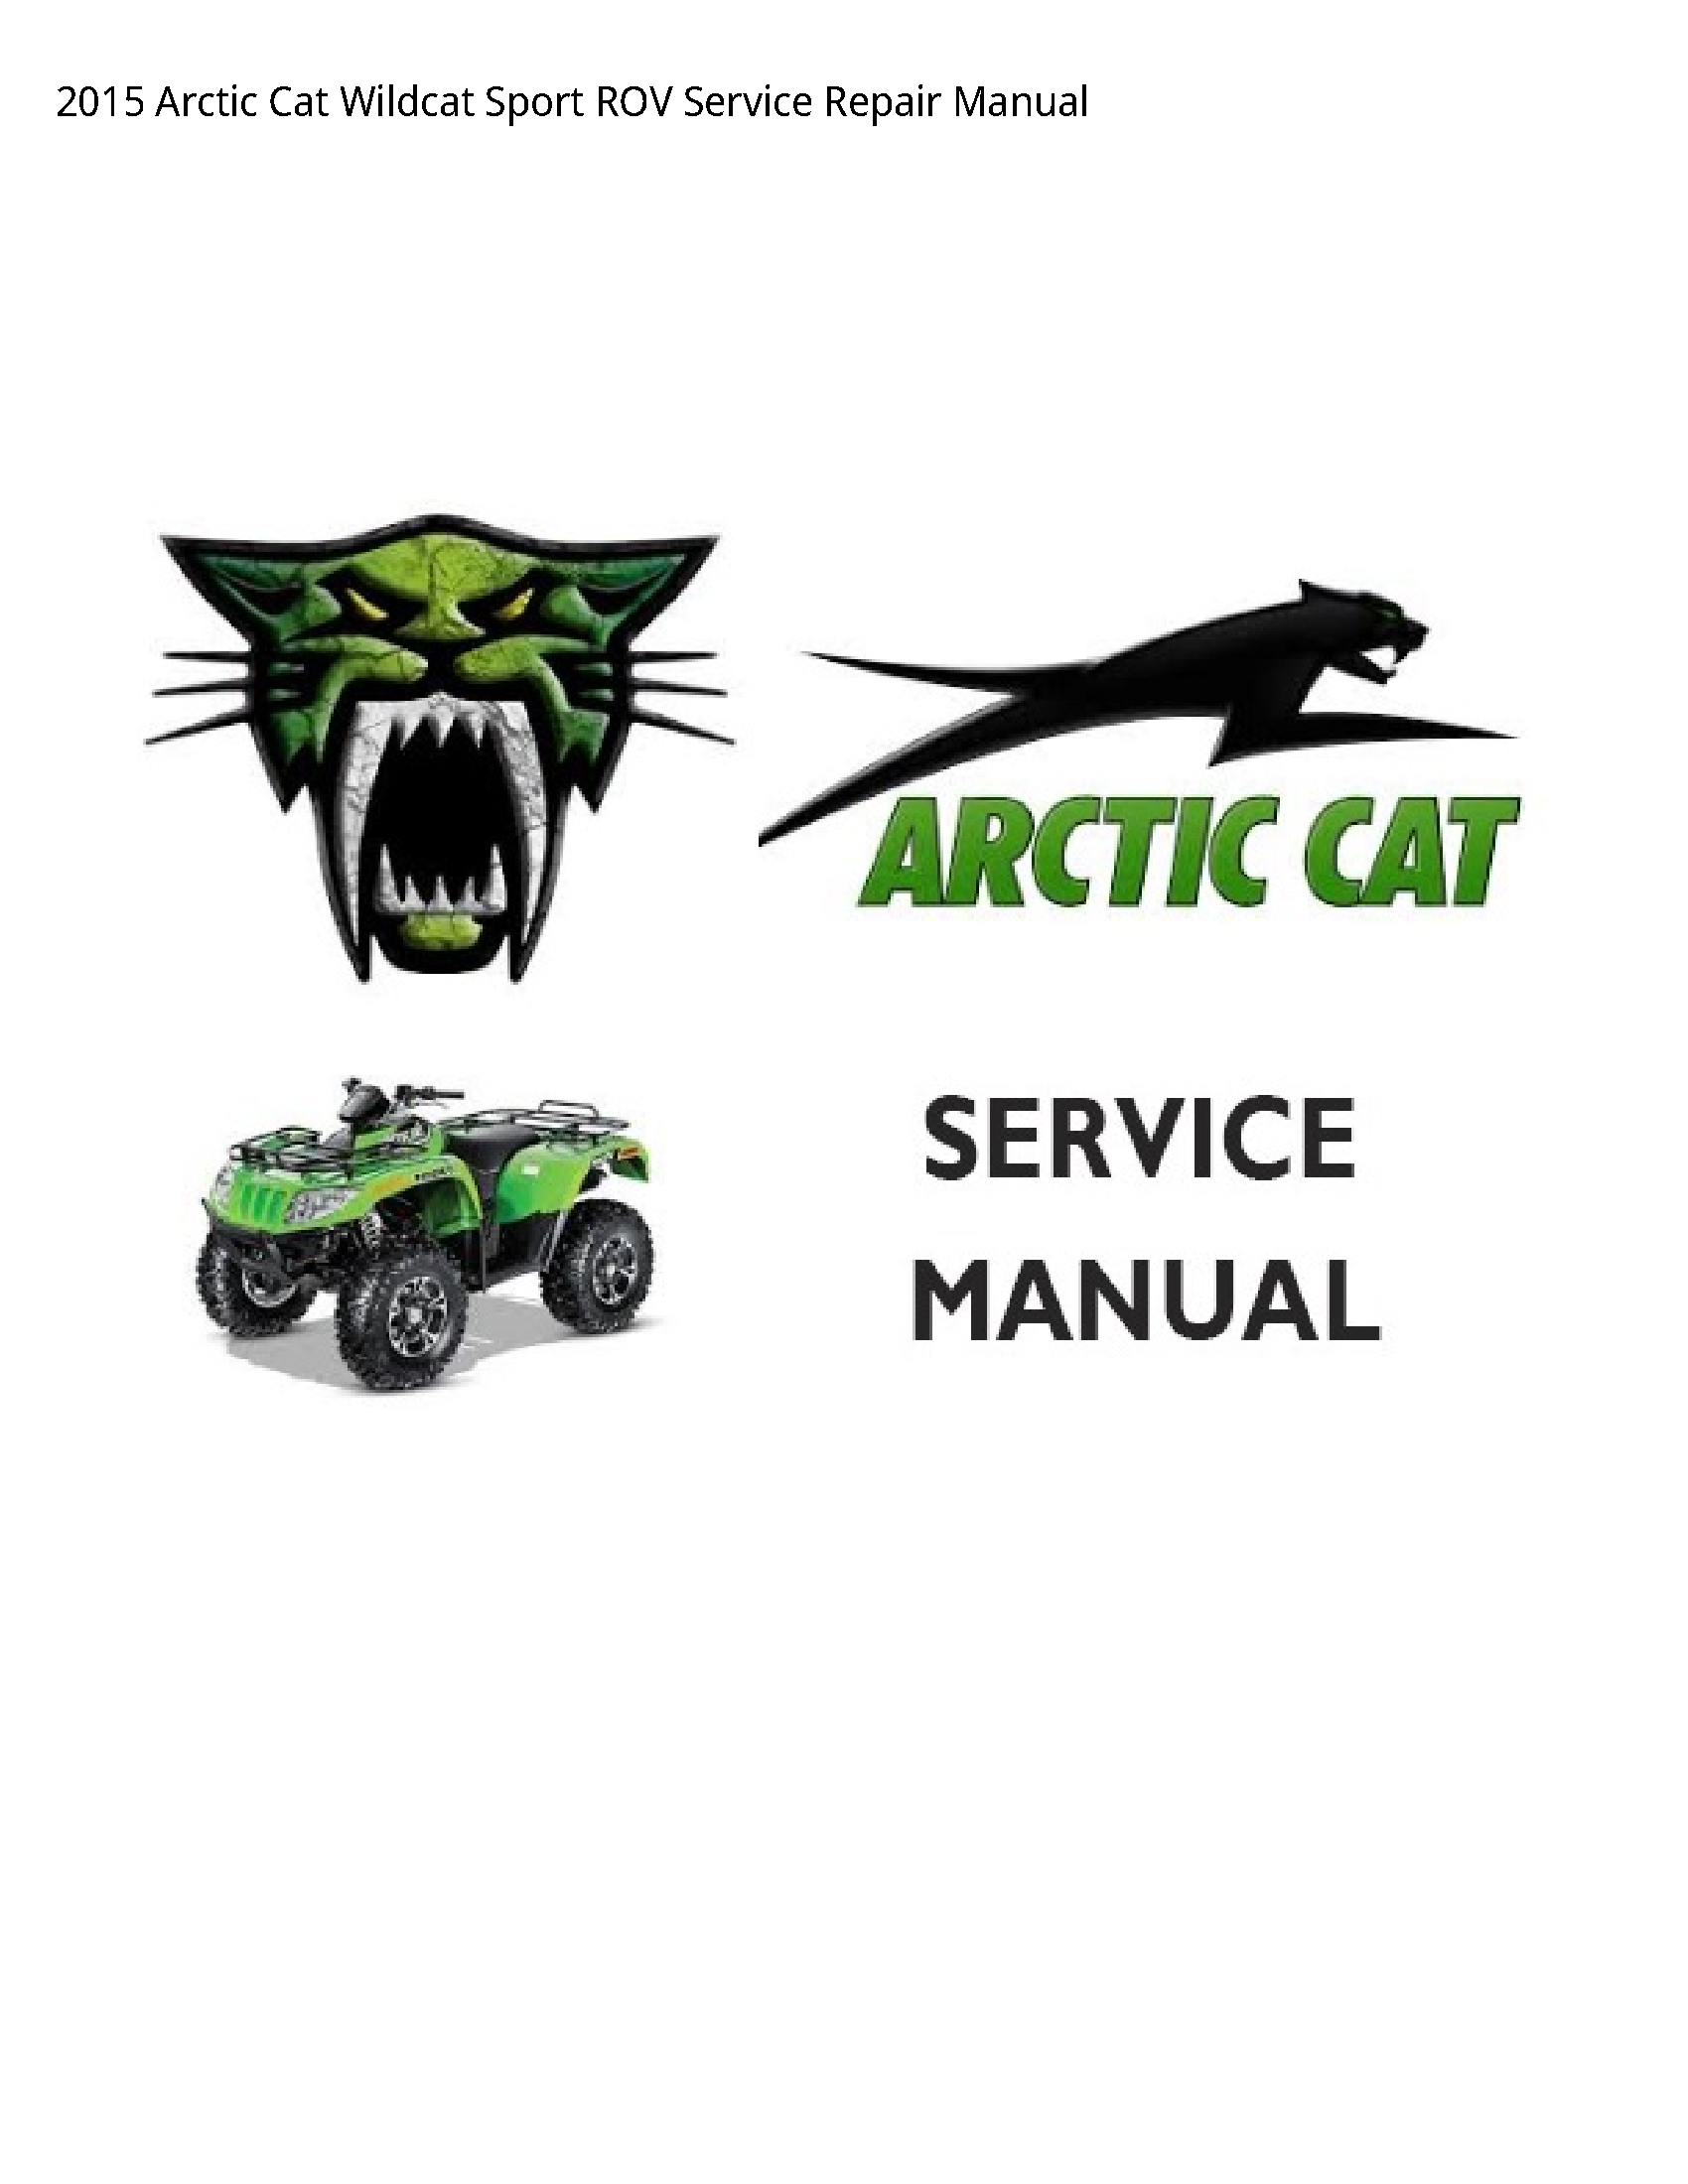 Arctic Cat Wildcat Sport ROV manual